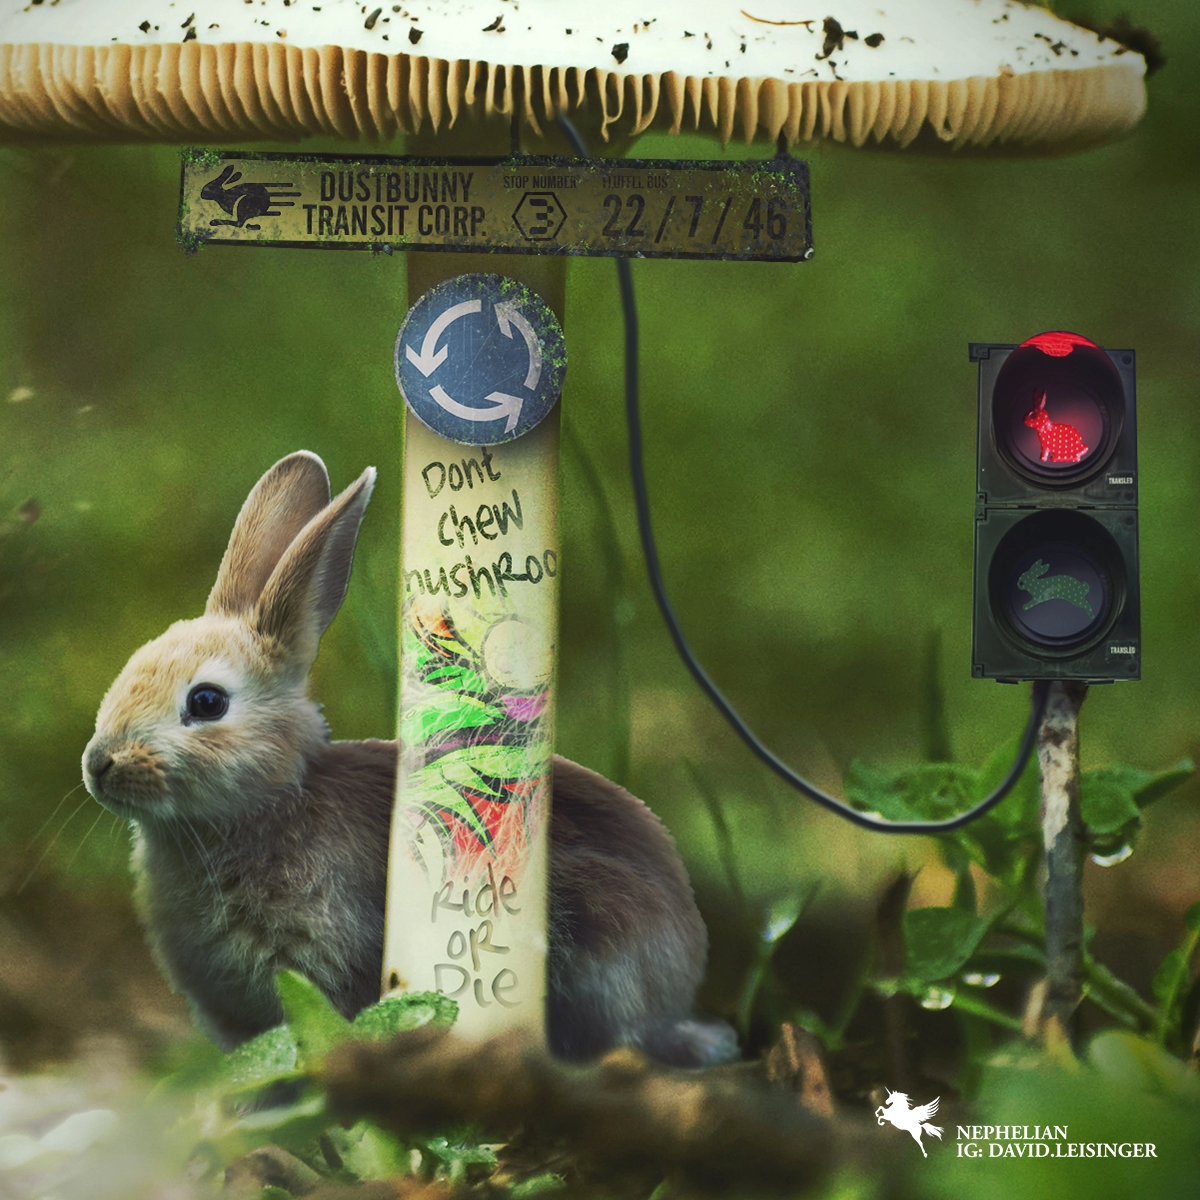 DustBunny Transit Corp ( Please don't chew the mushrooms ) 

#art #design #digital #digitalart #cgi #vfx #adobe #photoshop #photobash #rabbit #bunny #dustbunny